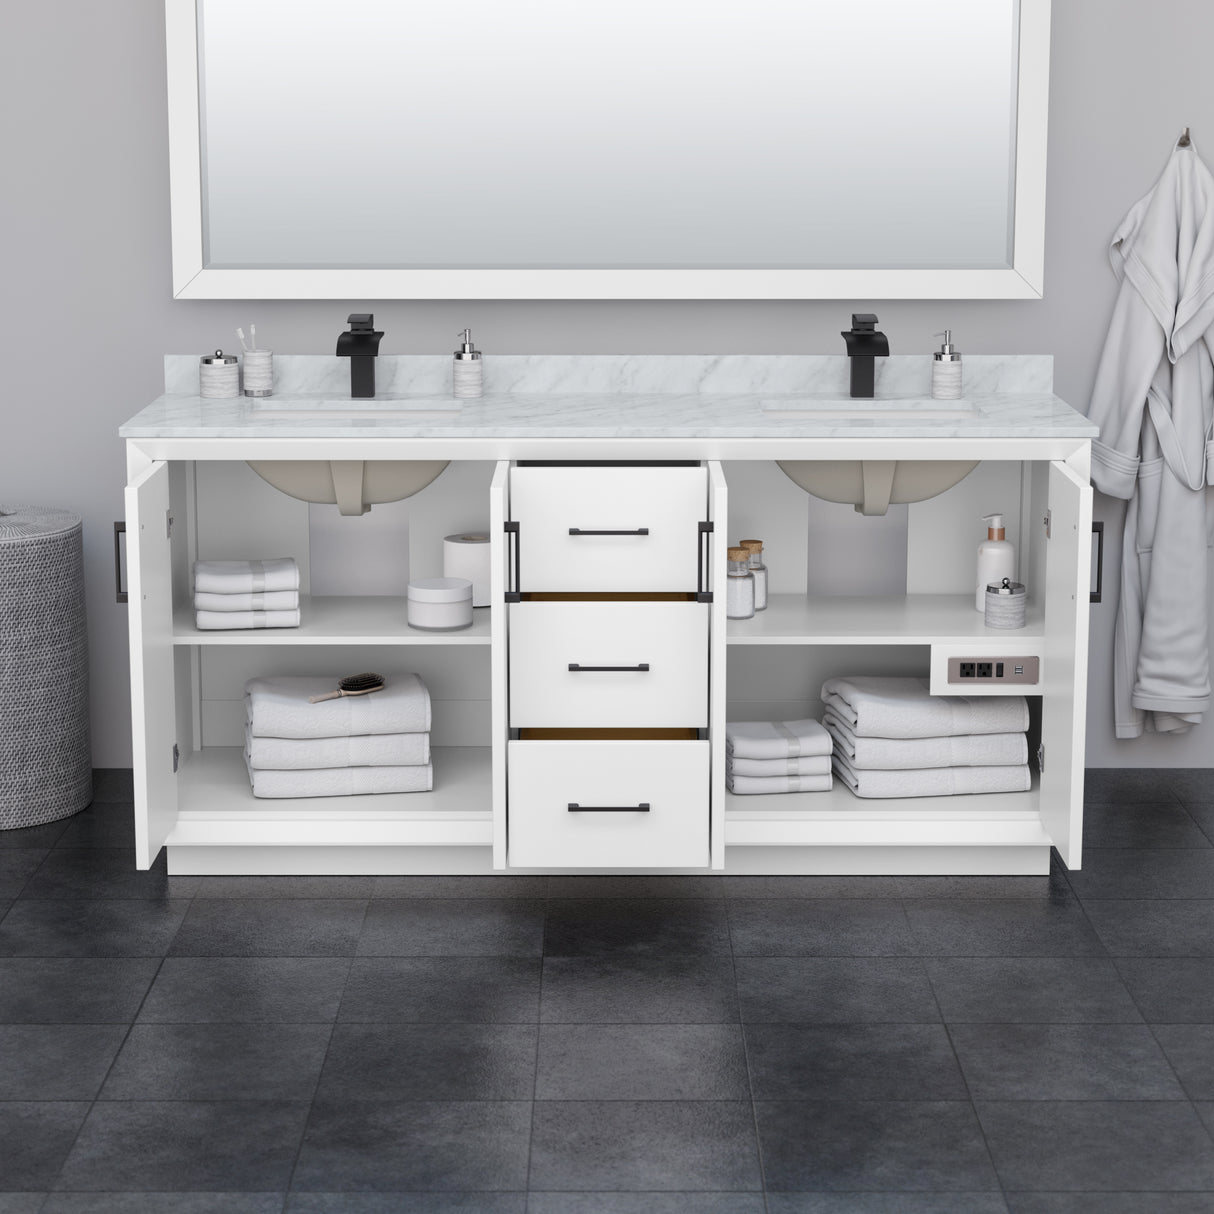 Strada 72 Inch Double Bathroom Vanity in White White Cultured Marble Countertop Undermount Square Sink Satin Bronze Trim